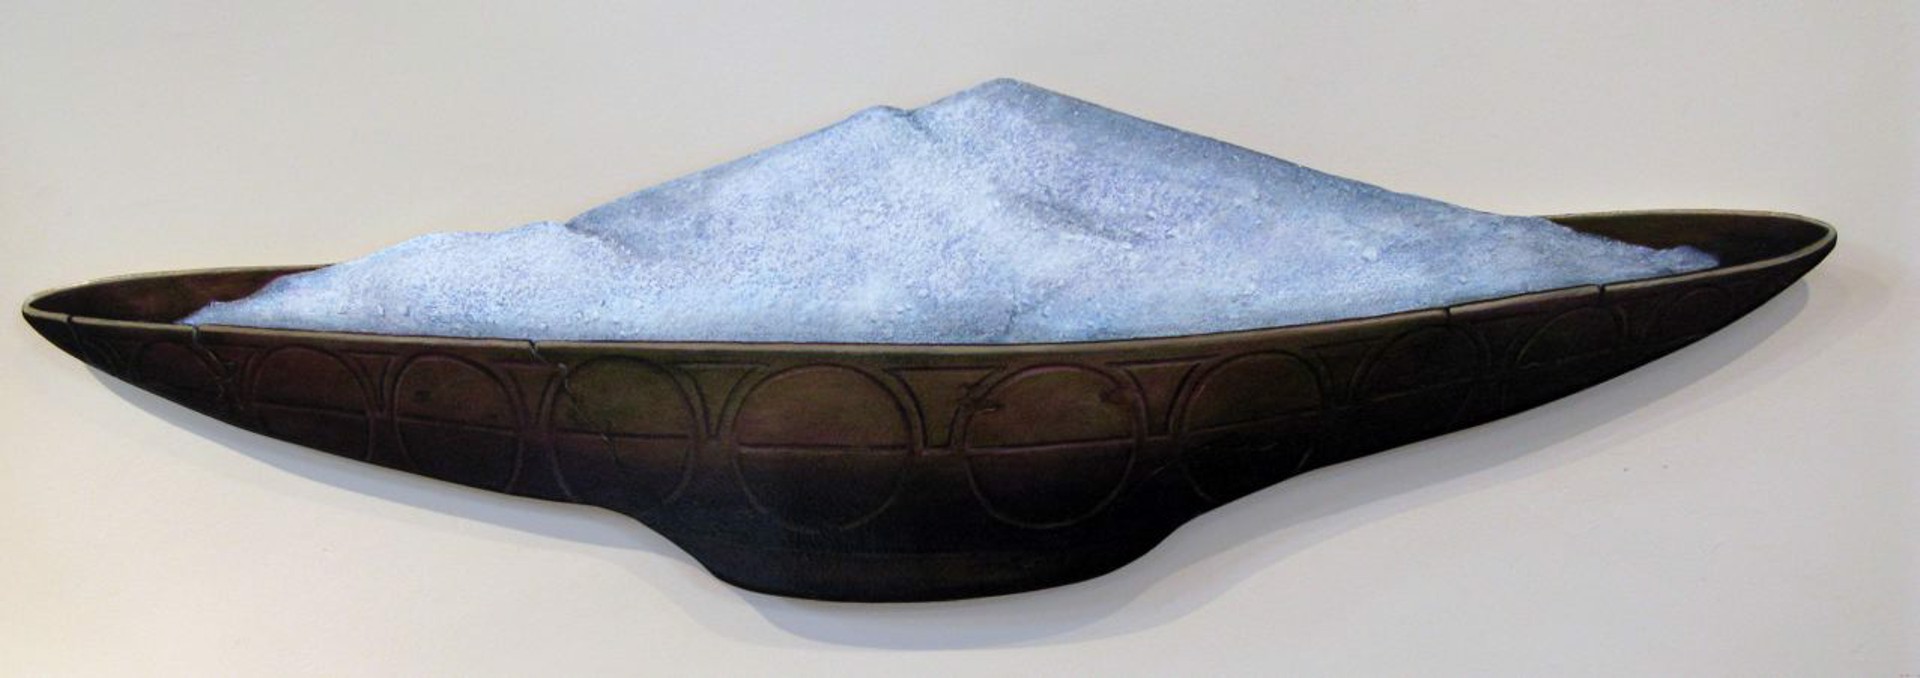 Salt Bowl by Helen Stanley